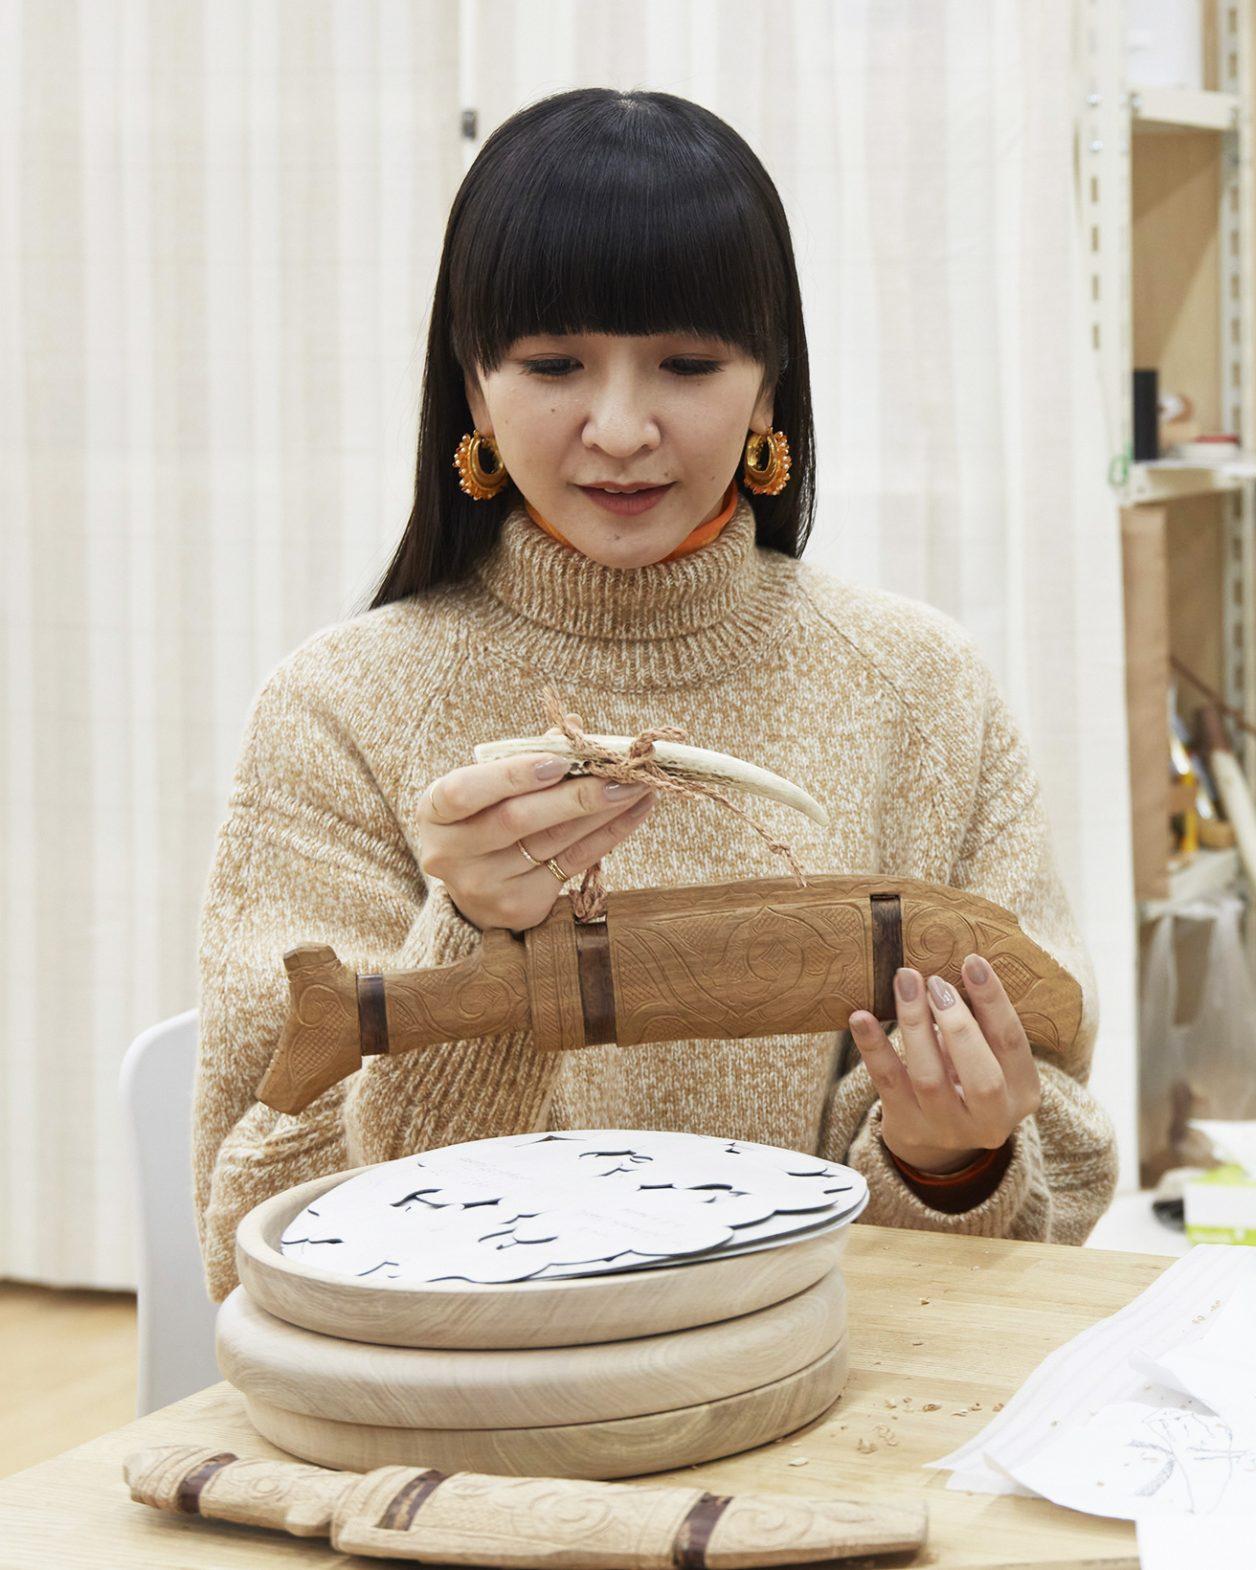 Kokontozai: KASHIYUKA’s Shop of Japanese Arts and Crafts /[AINU CRAFTS]